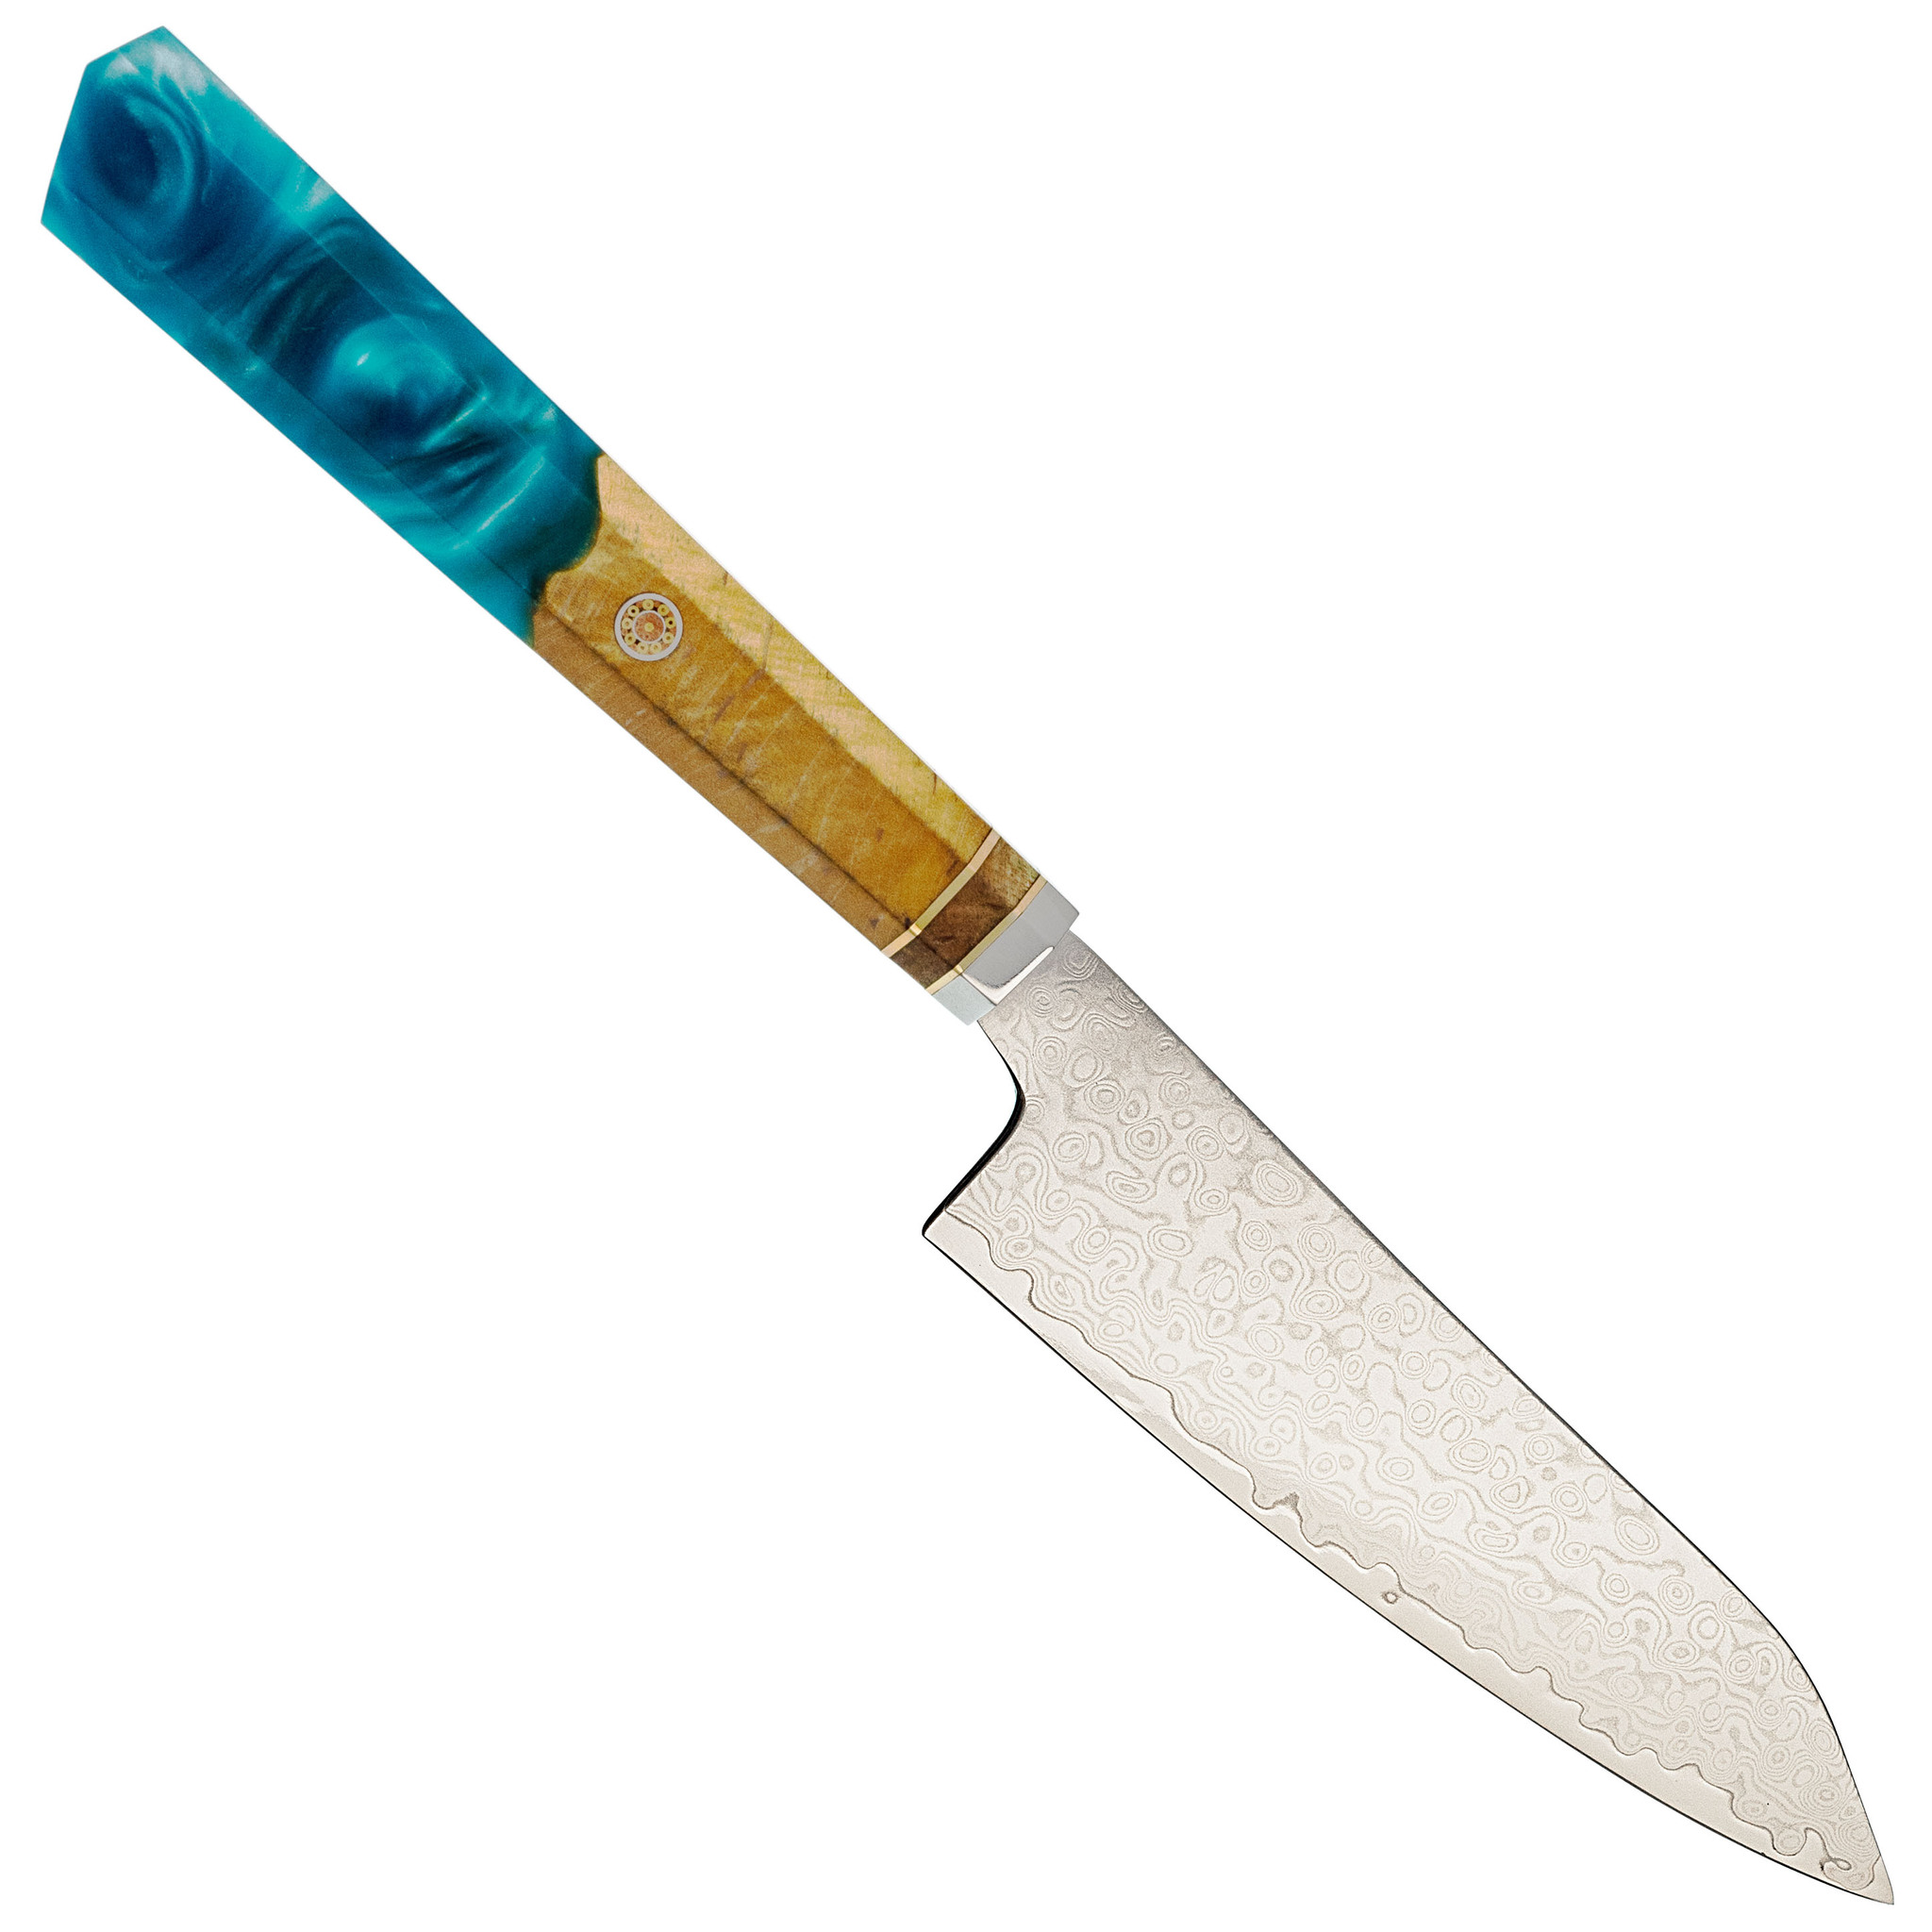 Кухонный нож Tuotown, сталь VG10, рукоять дерево/эпоксидка - фото 3